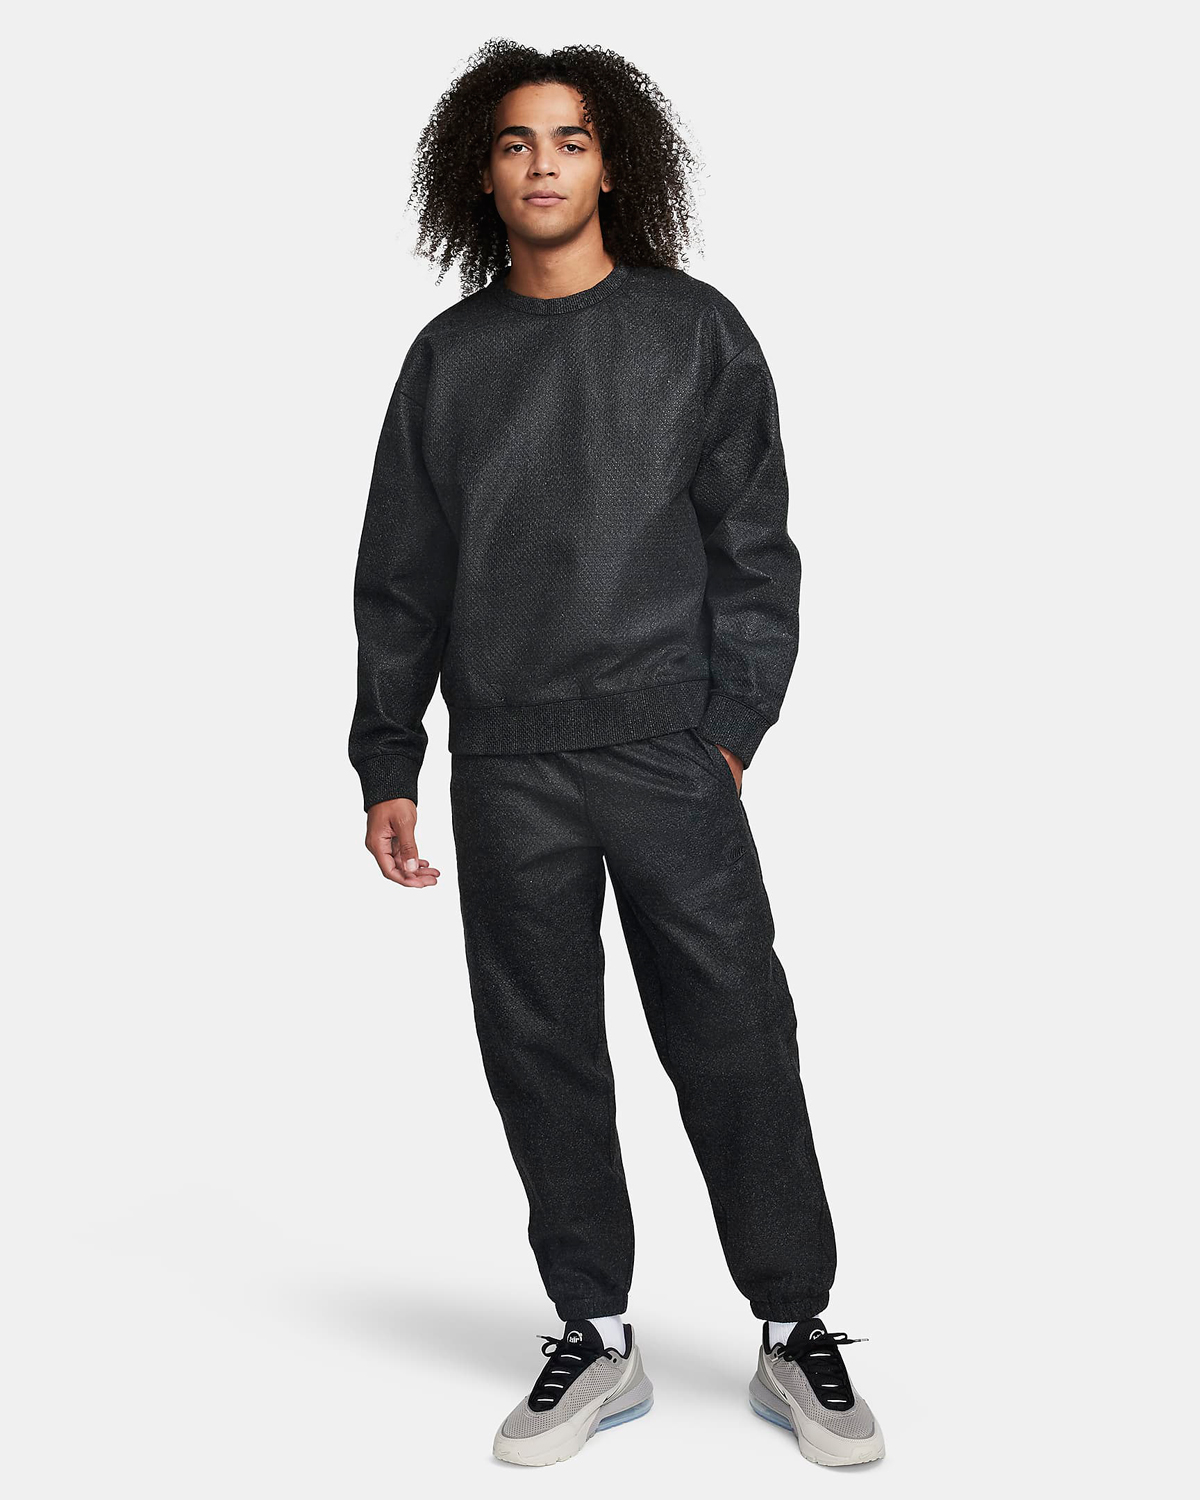 Nike-Forward-Sweatshirt-Anthracite